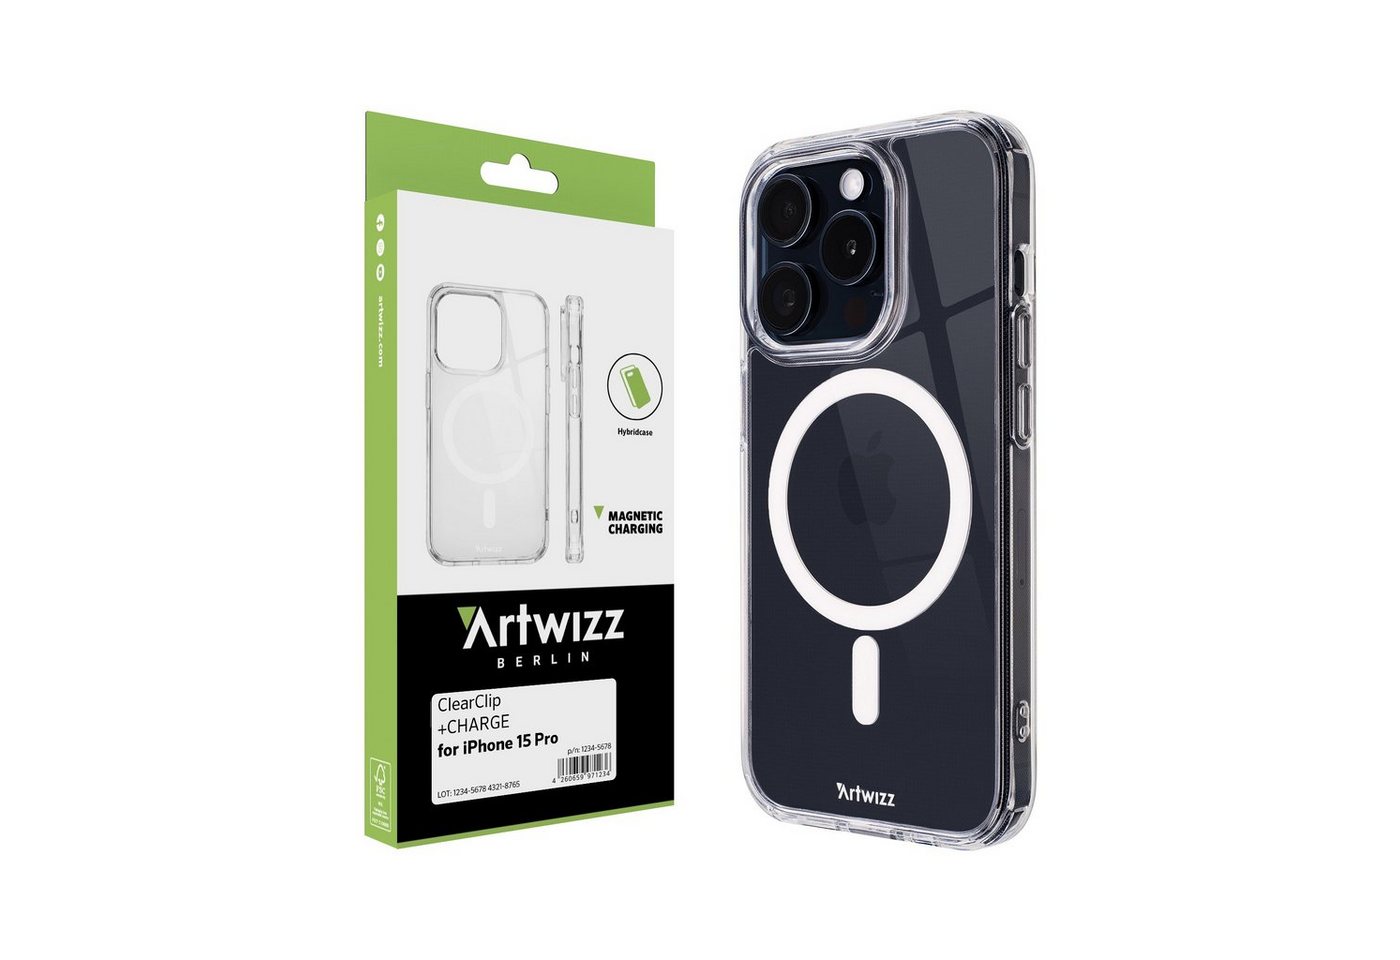 Artwizz Bumper ClearClip +CHARGE, Robuste, Klare Schutzhülle mit Magnet Ladefunktion, iPhone 15 Pro von Artwizz